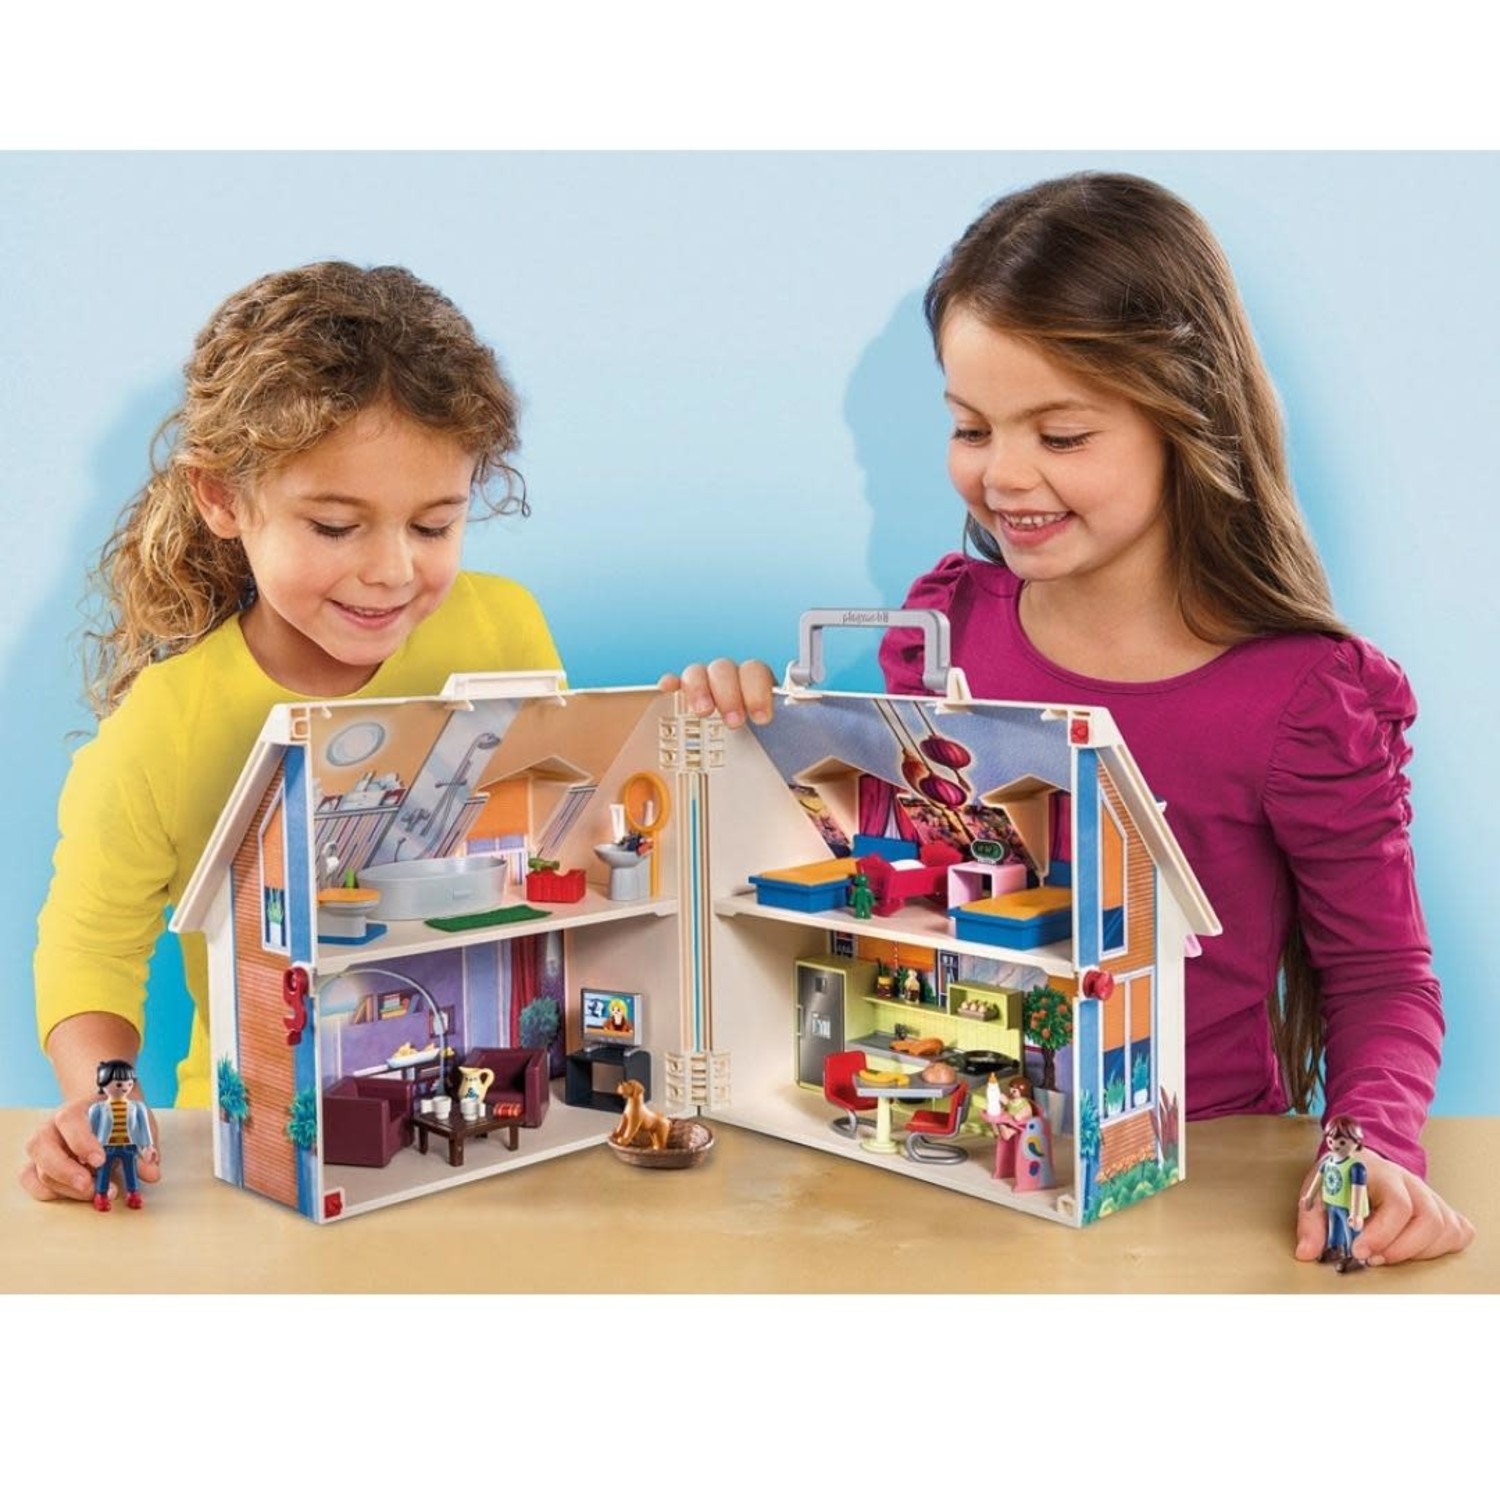 Playmobil Take Along Modern Dollhouse - Mudpuddles Toys and